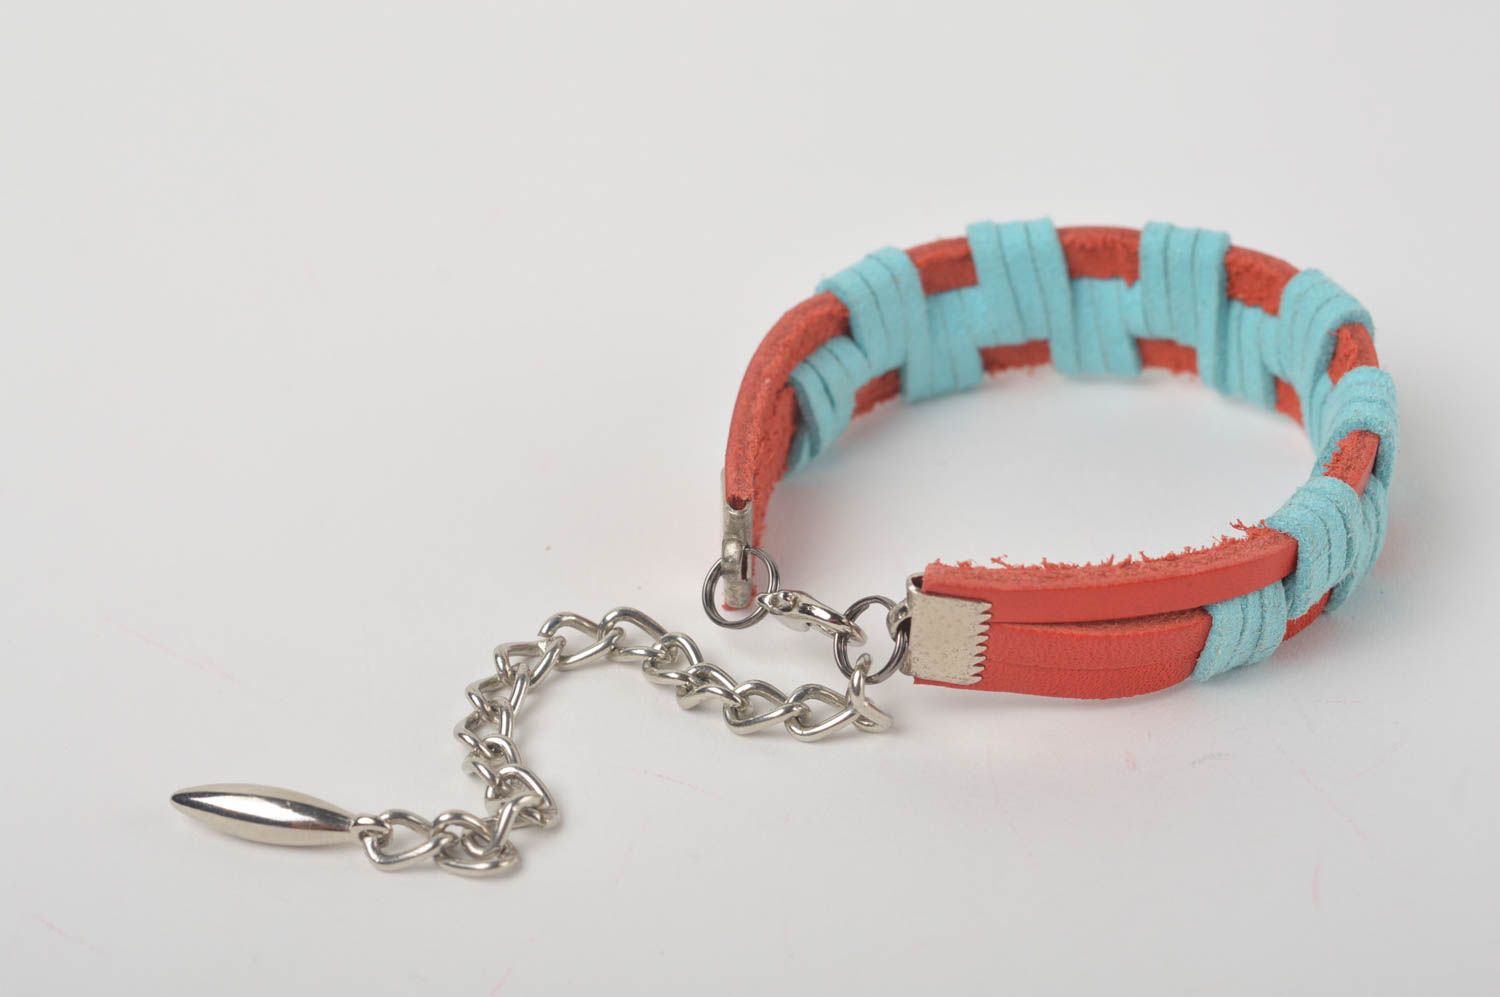 Stylish handmade leather bracelet fashion accessories cool jewelry designs photo 3